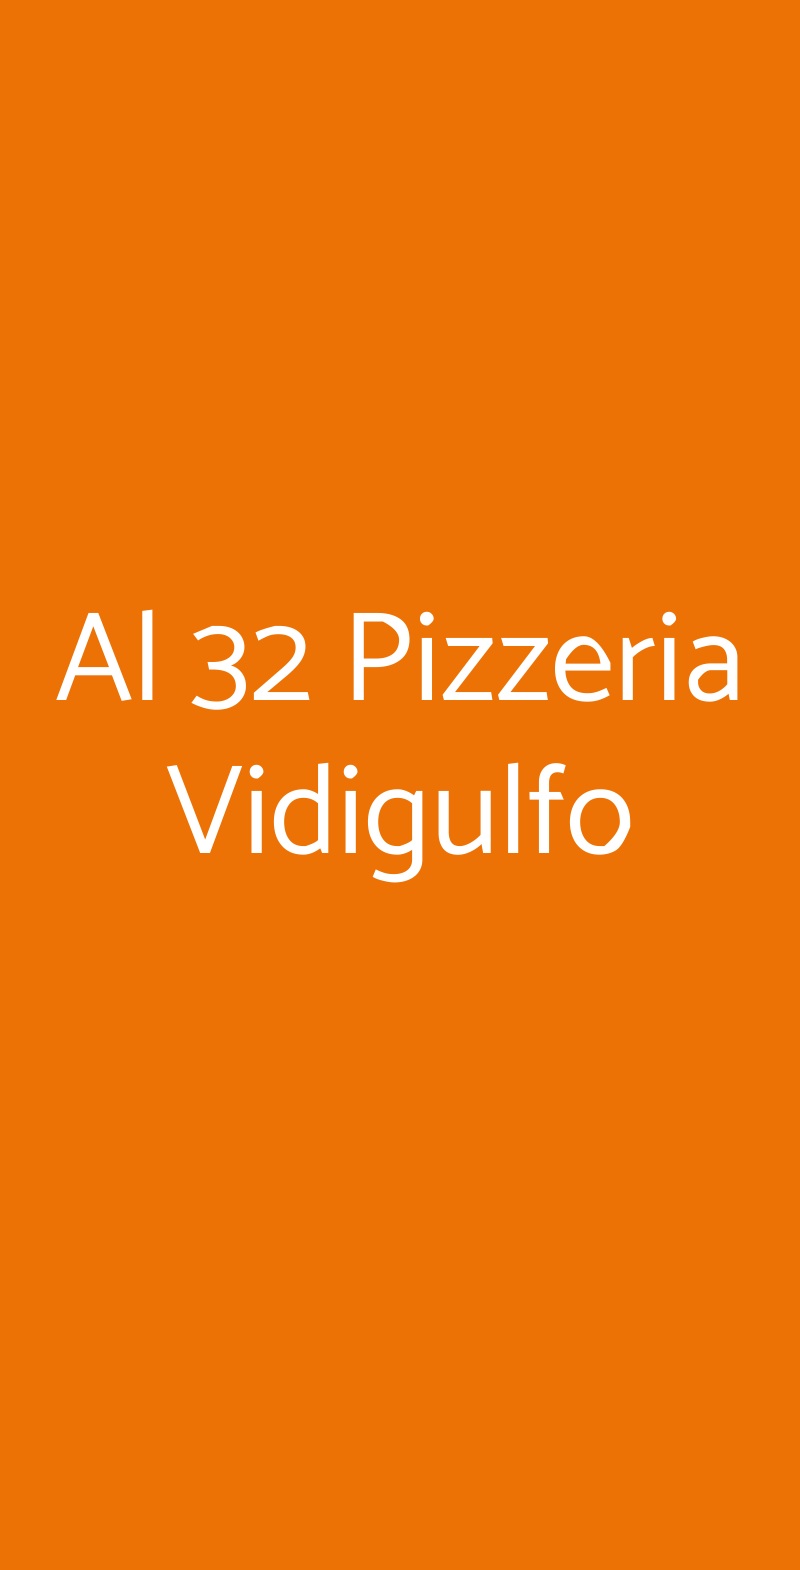 Al 32 Pizzeria Vidigulfo Vidigulfo menù 1 pagina